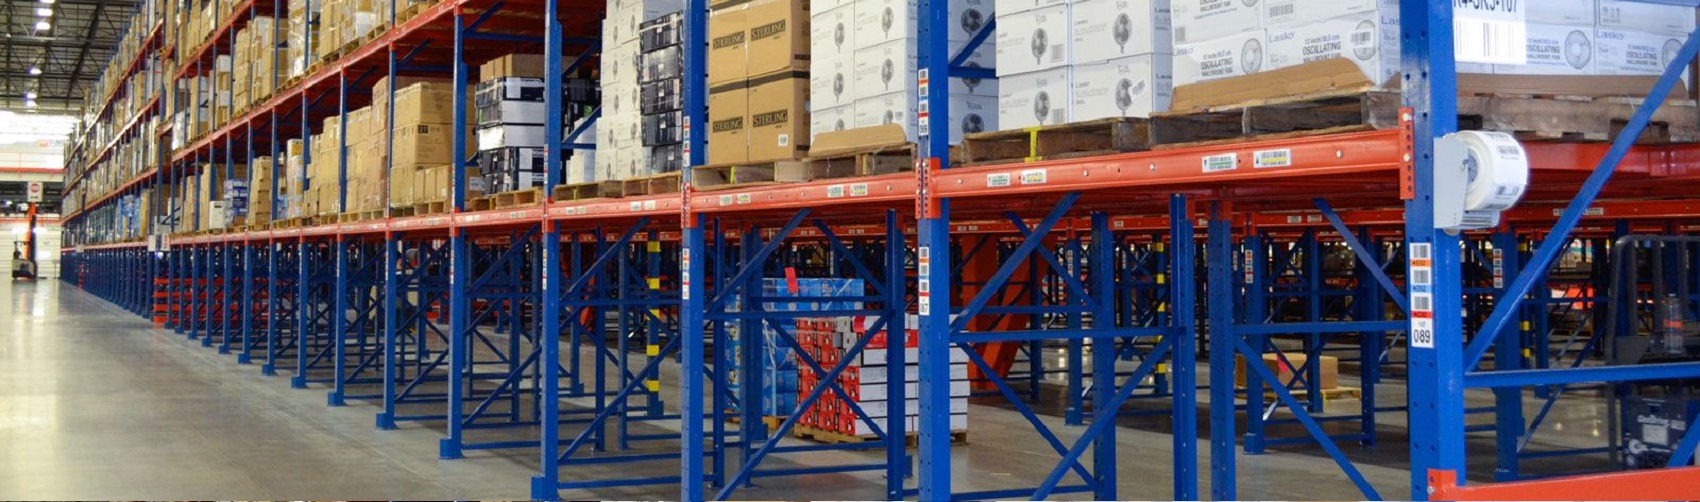 Qatar-Warehouse-Shelving